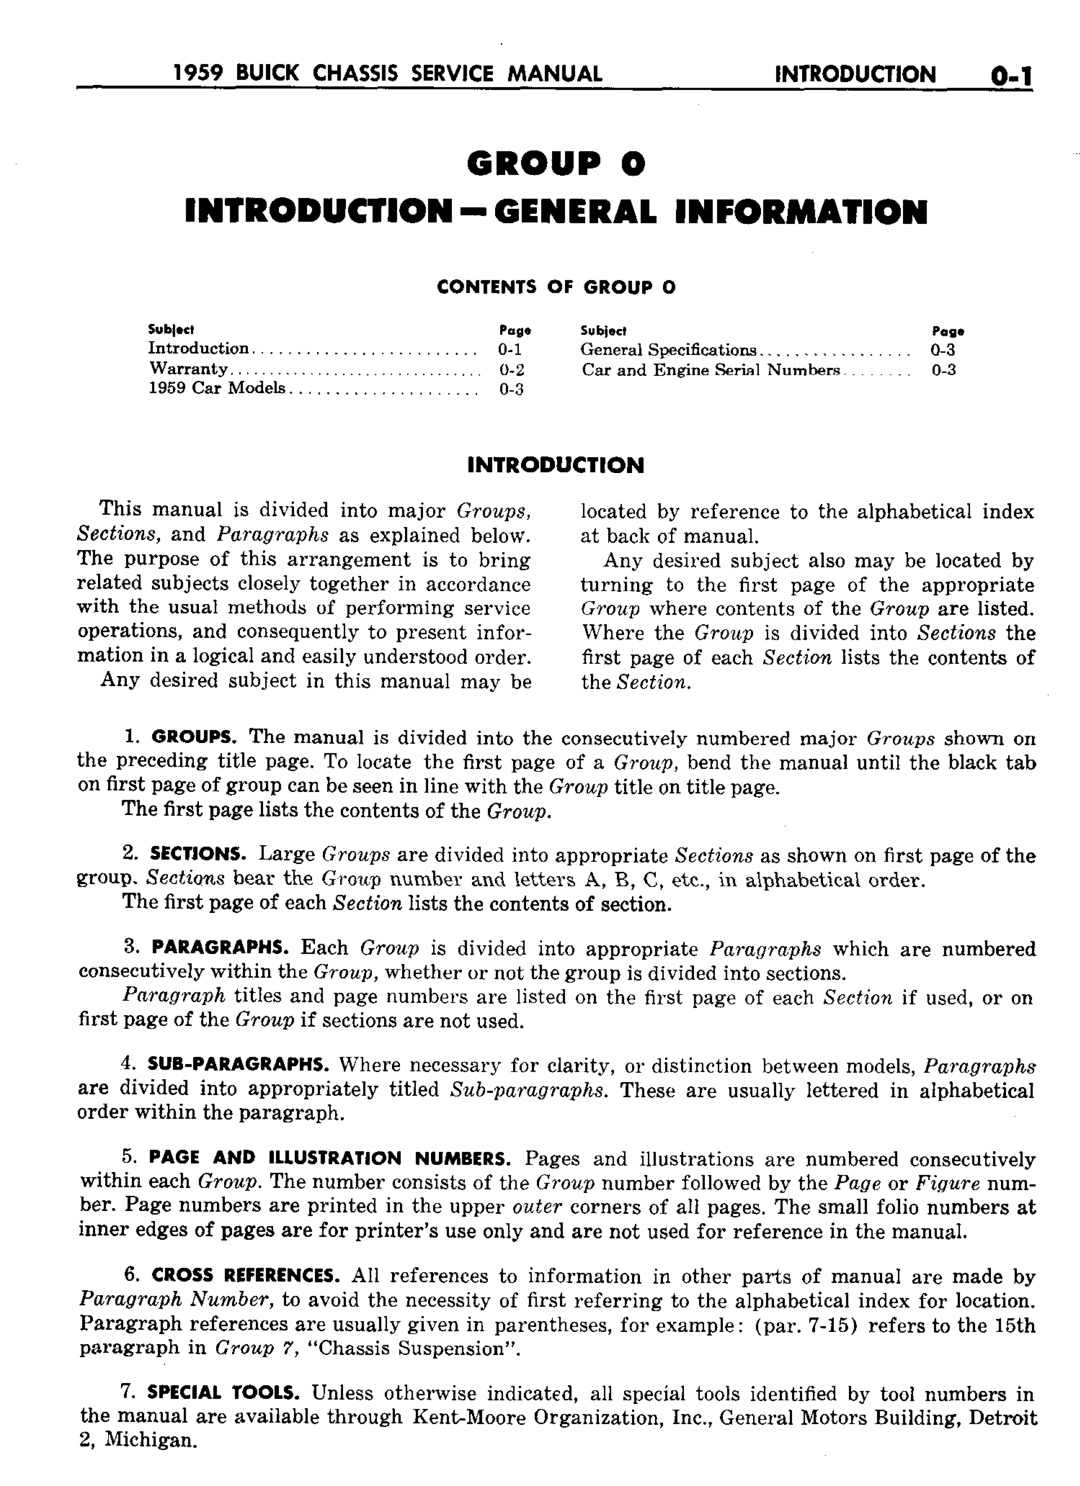 n_01 1959 Buick Shop Manual - Gen Information-003-003.jpg